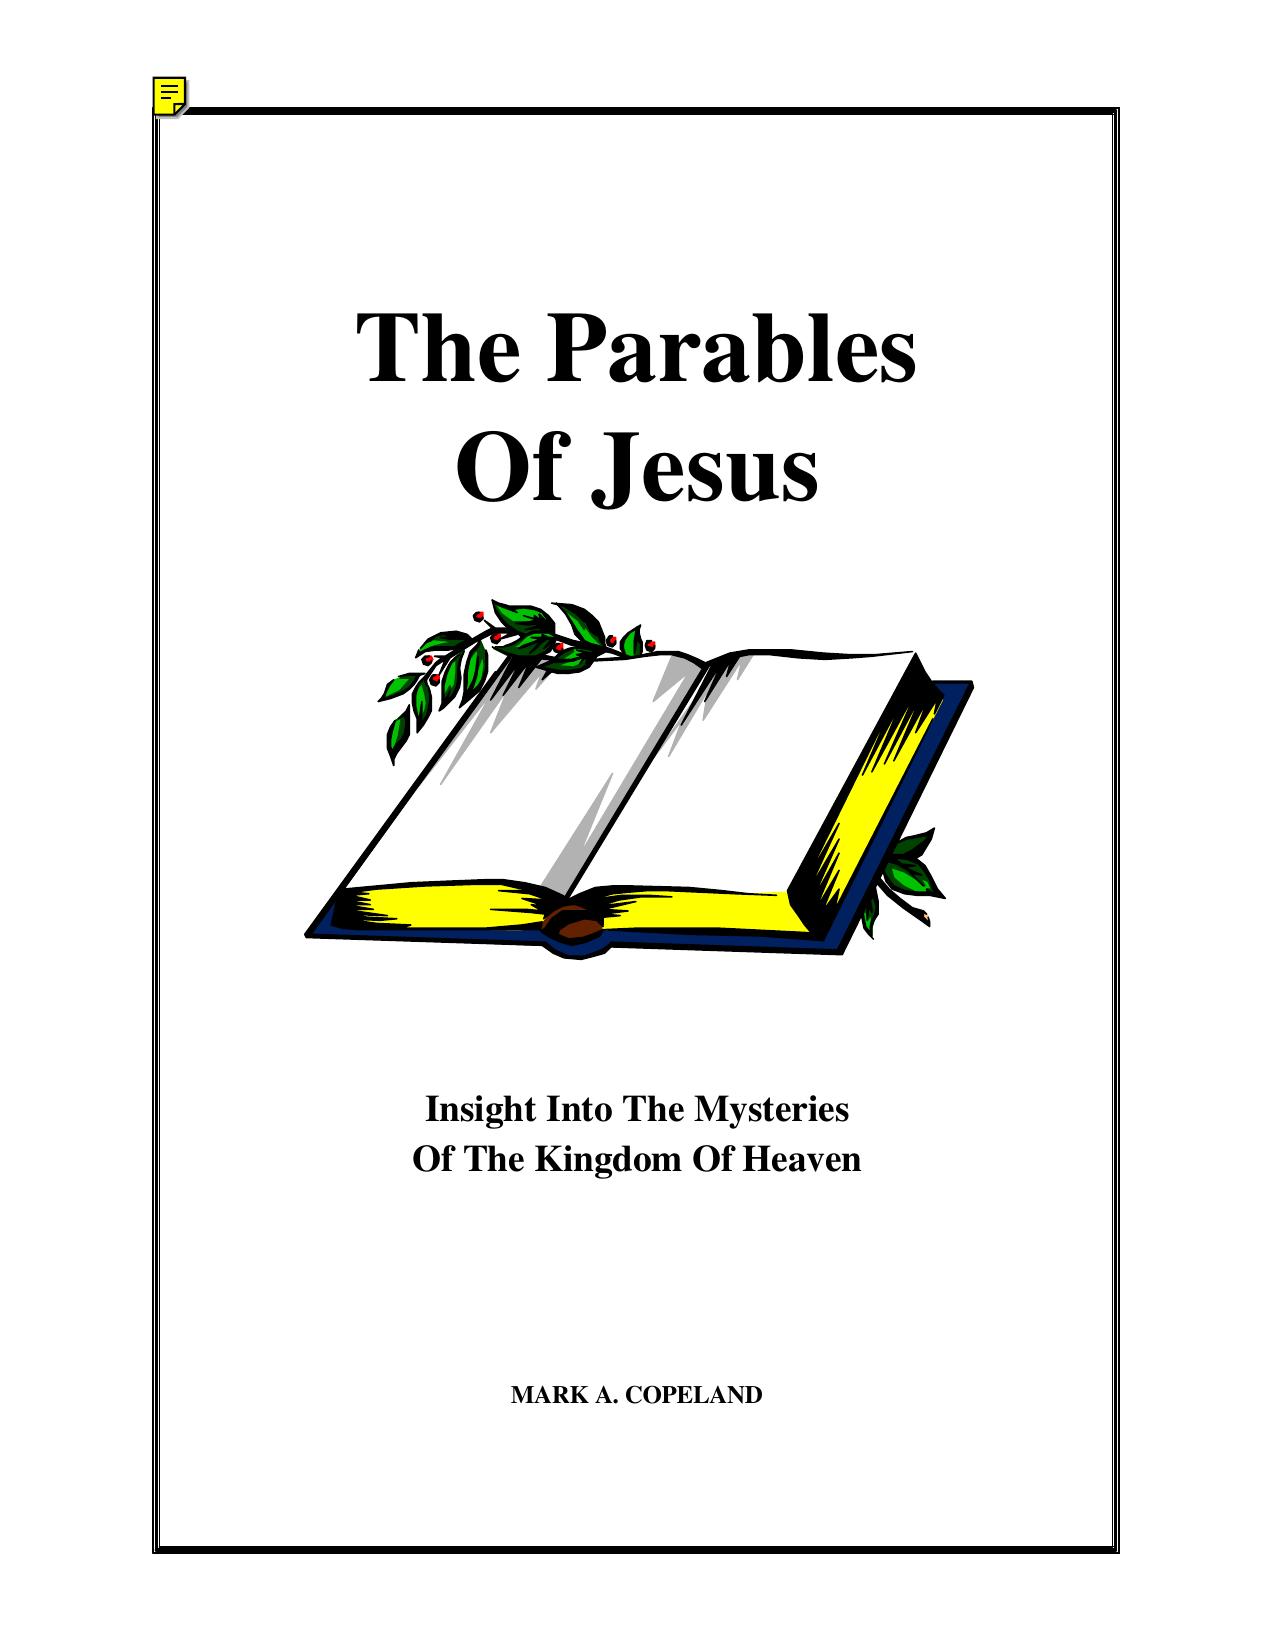 Copeland, Marck - Parables of Jesus by Mark Copeland